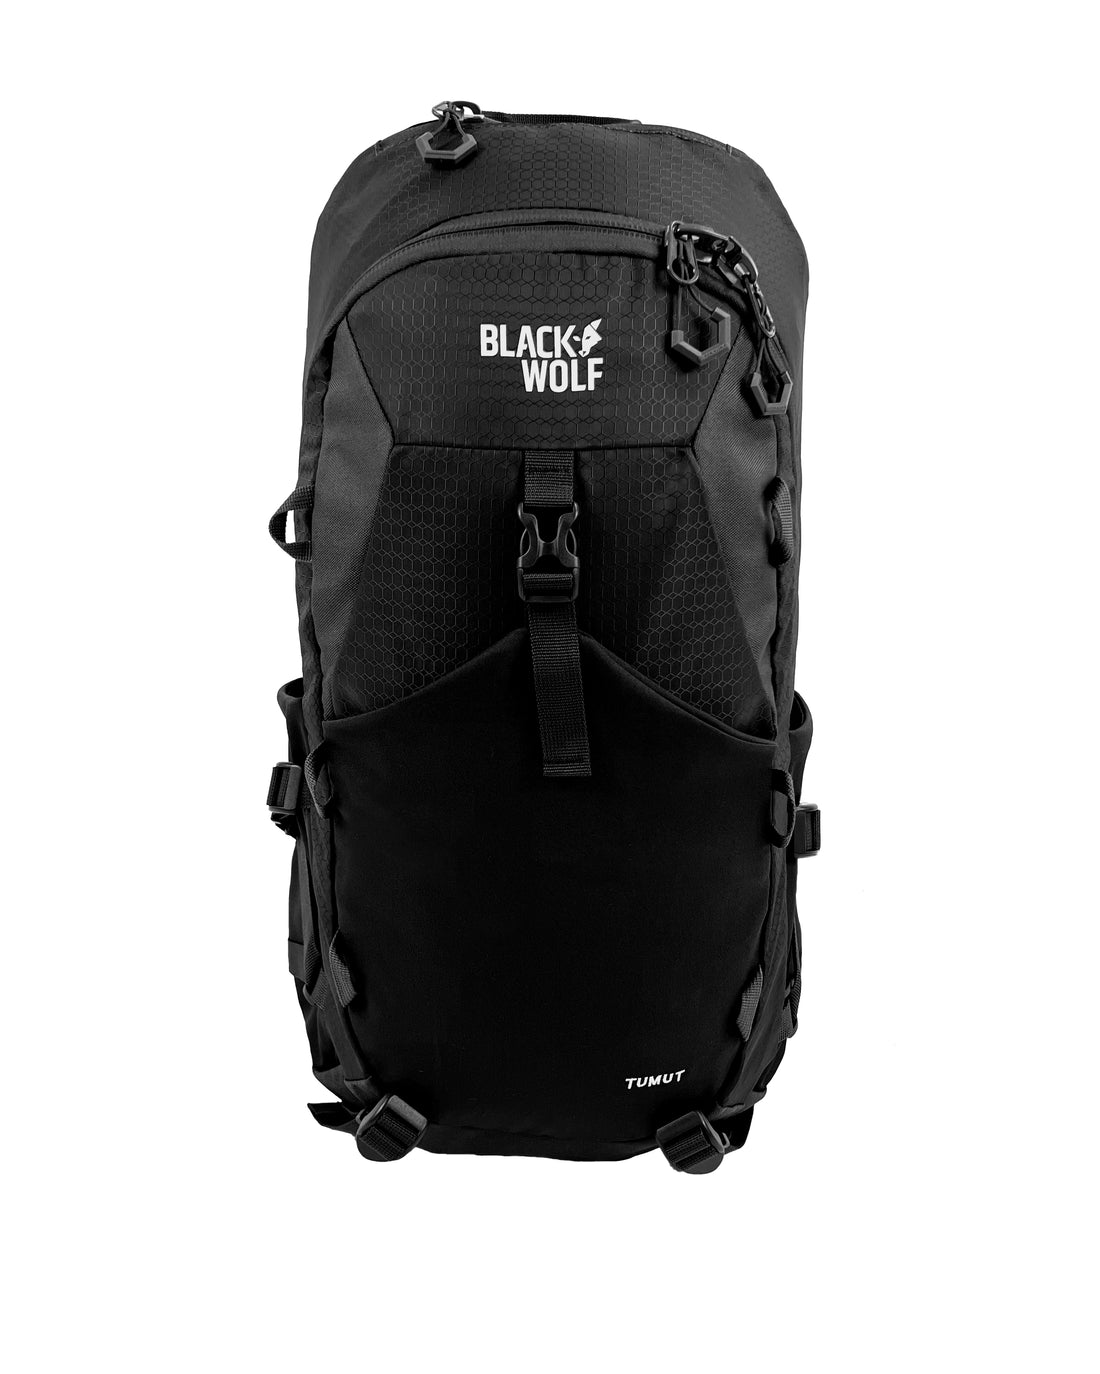 Black Wolf - Tumut 25L Backpack - Jet Black-3